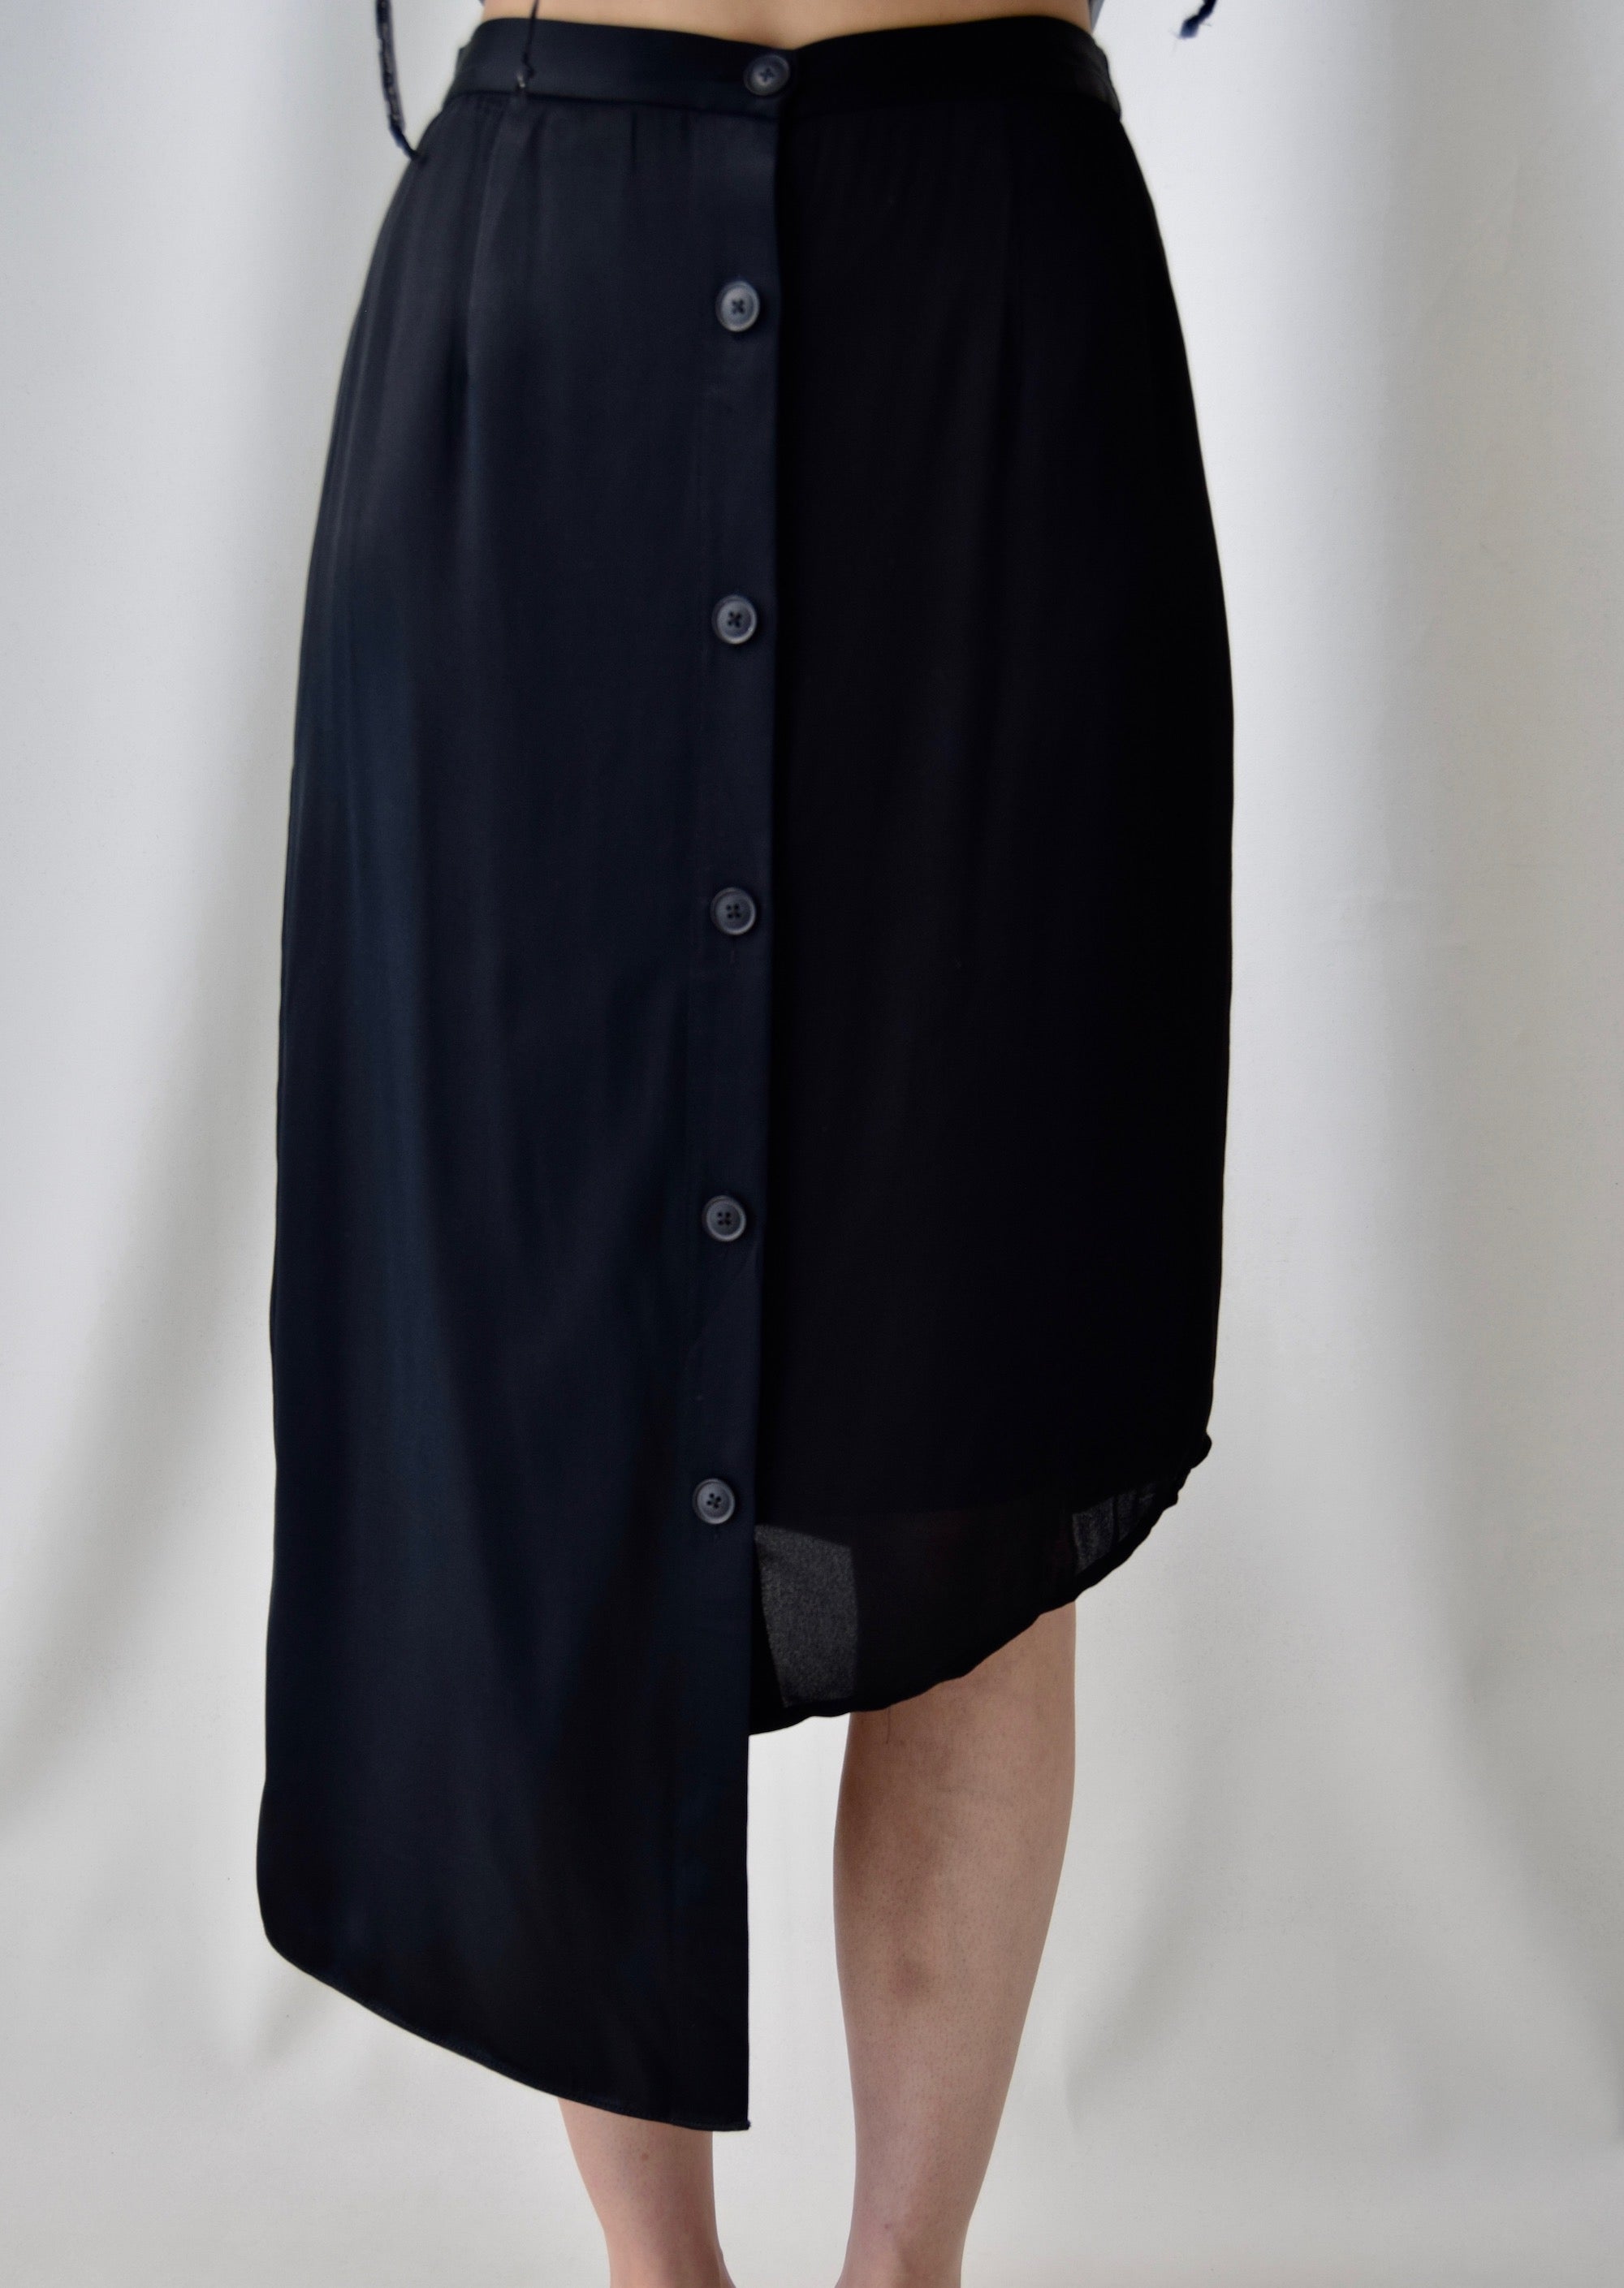 DKNY Asymmetrical Skirt